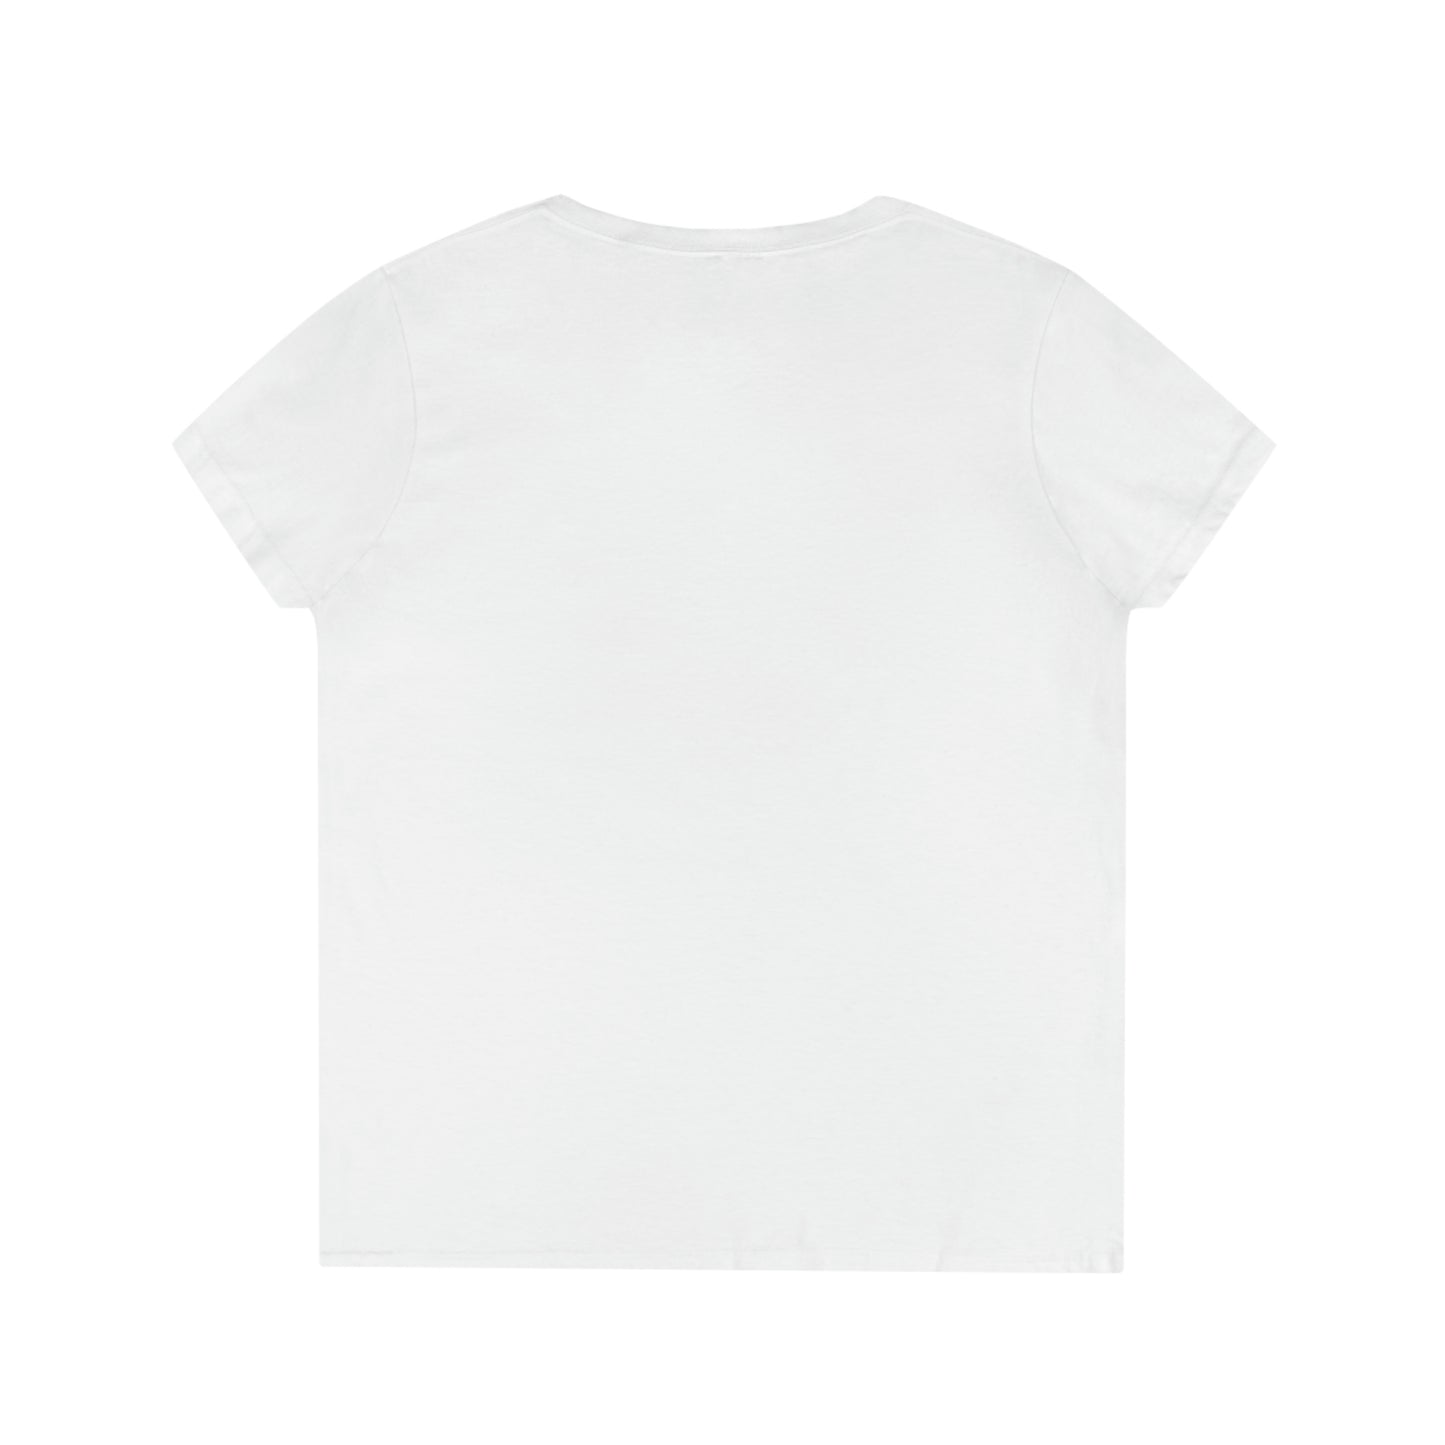 "I am My Own Superhero" 100% Cotton V-Neck T-Shirt